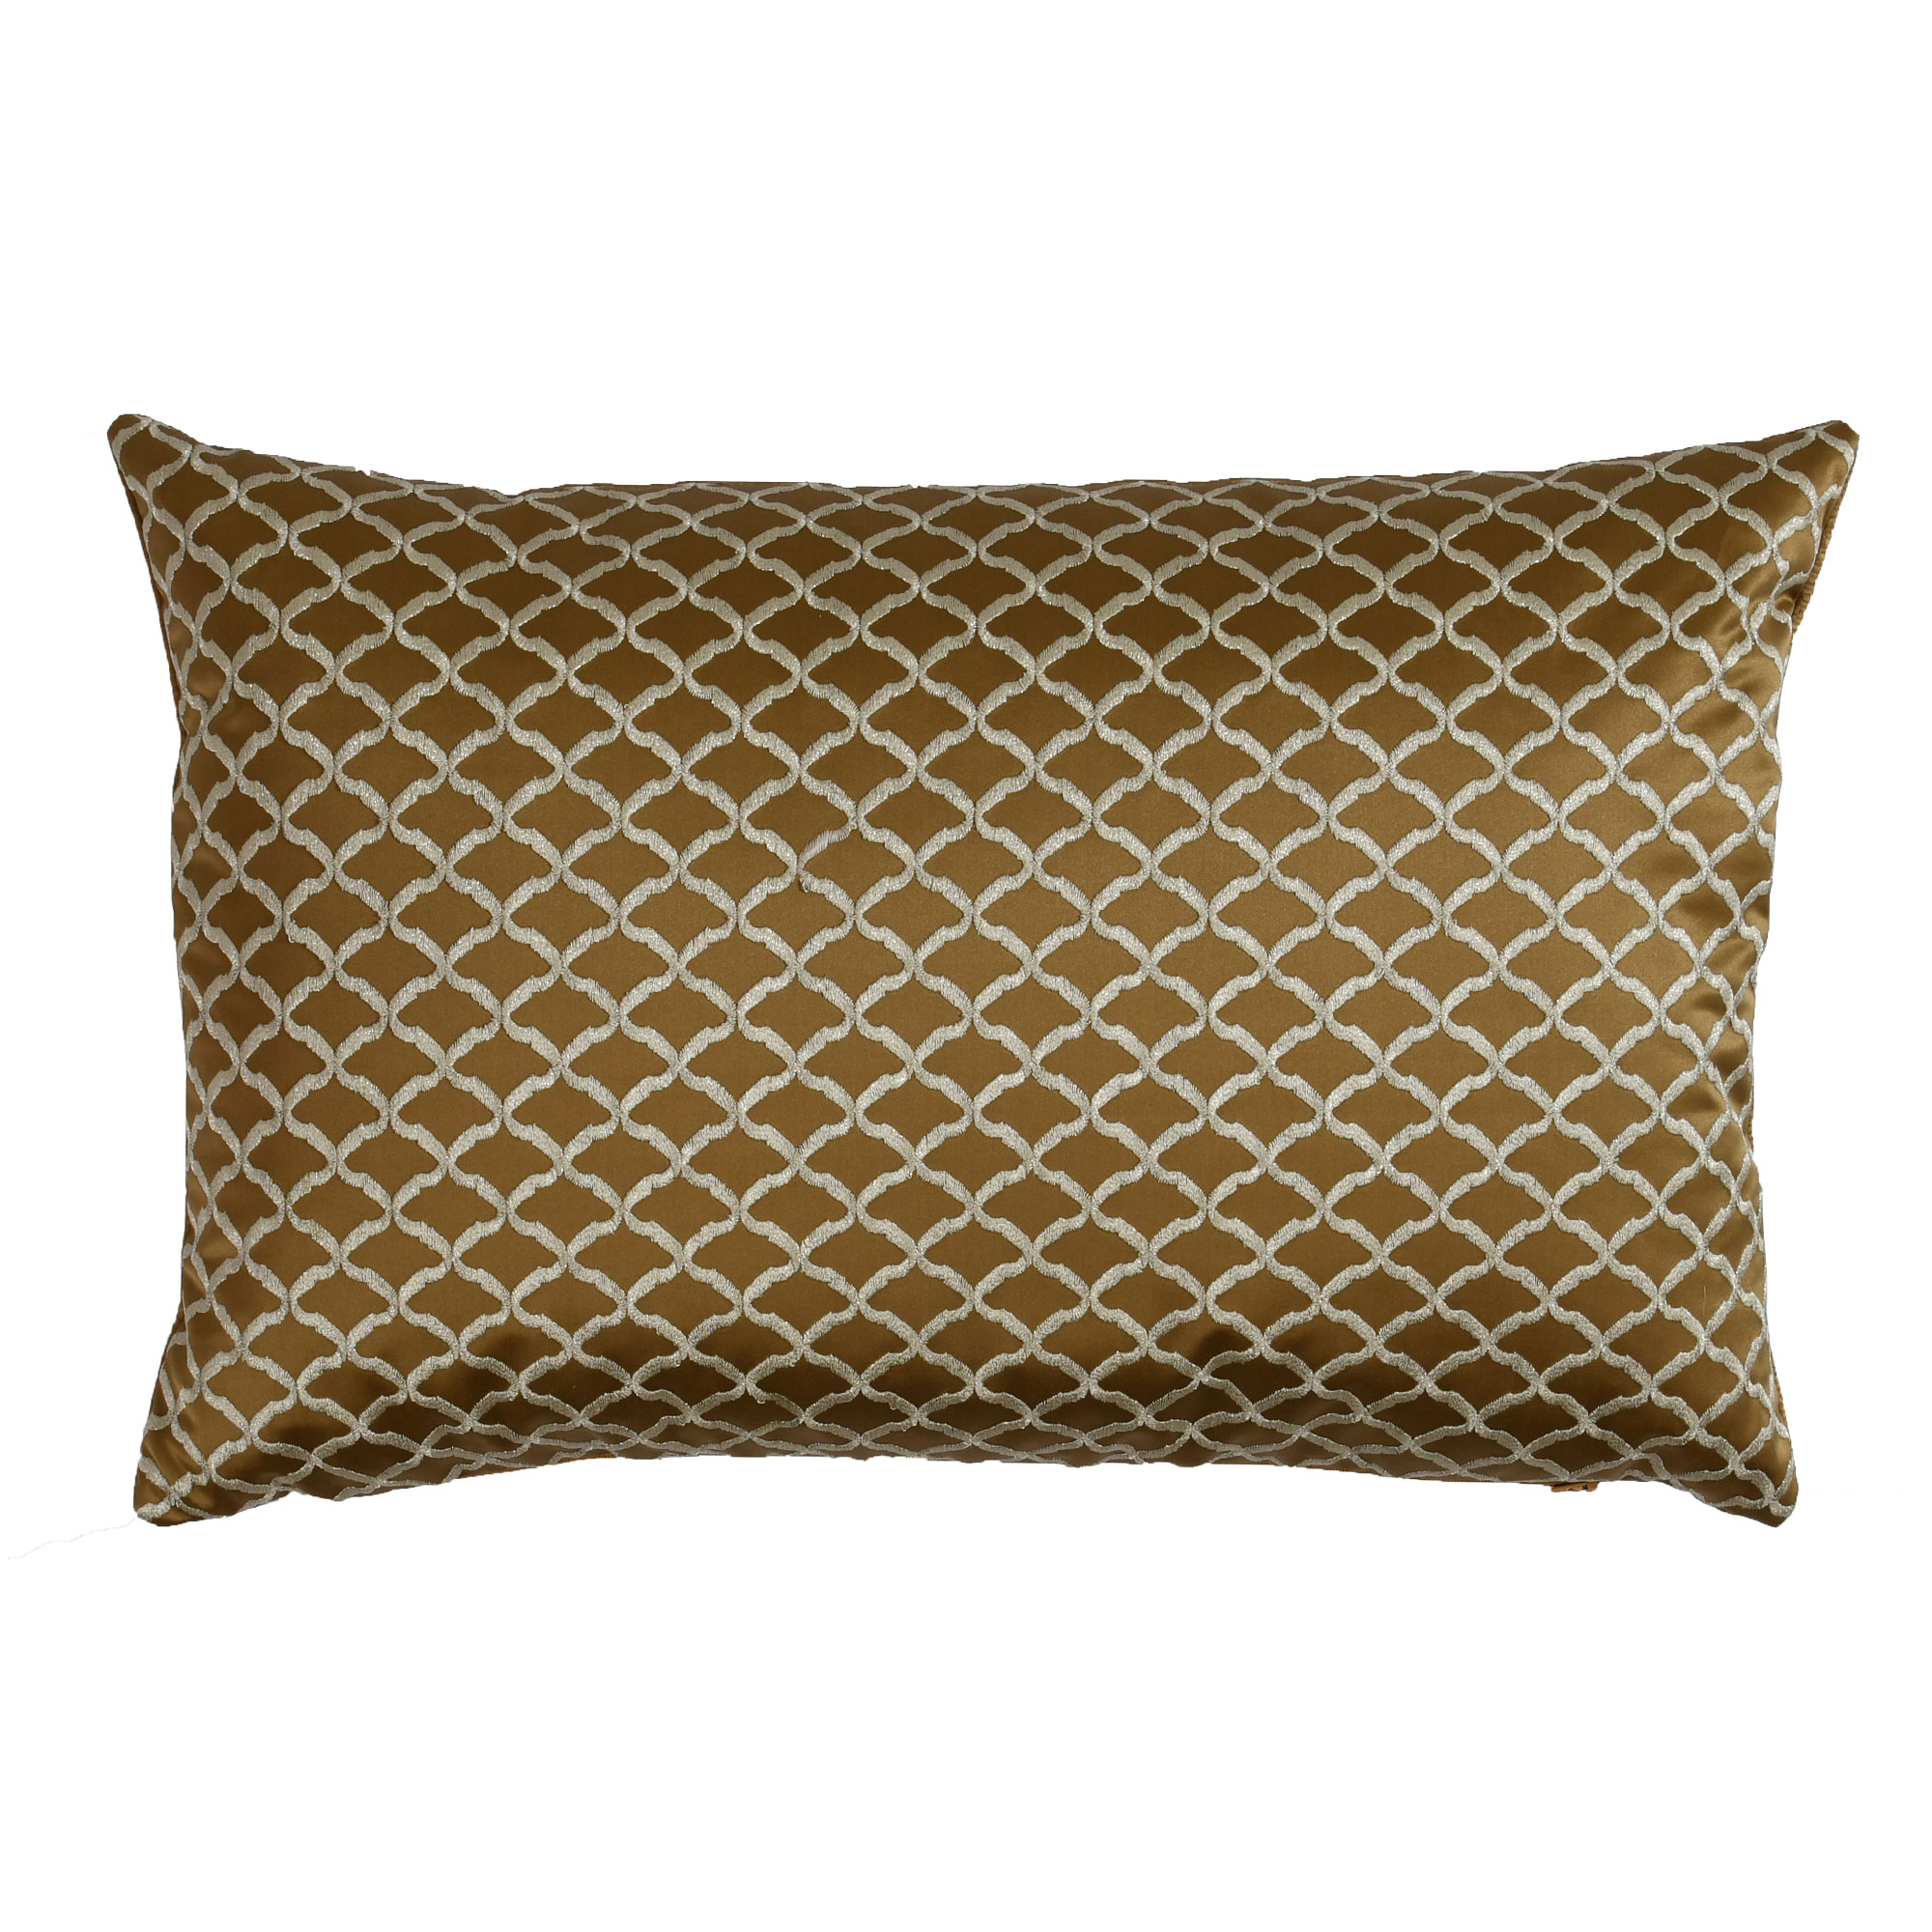 Fishpools Cushions Reggio Textured Gold Cushion Large - Golden Midnight